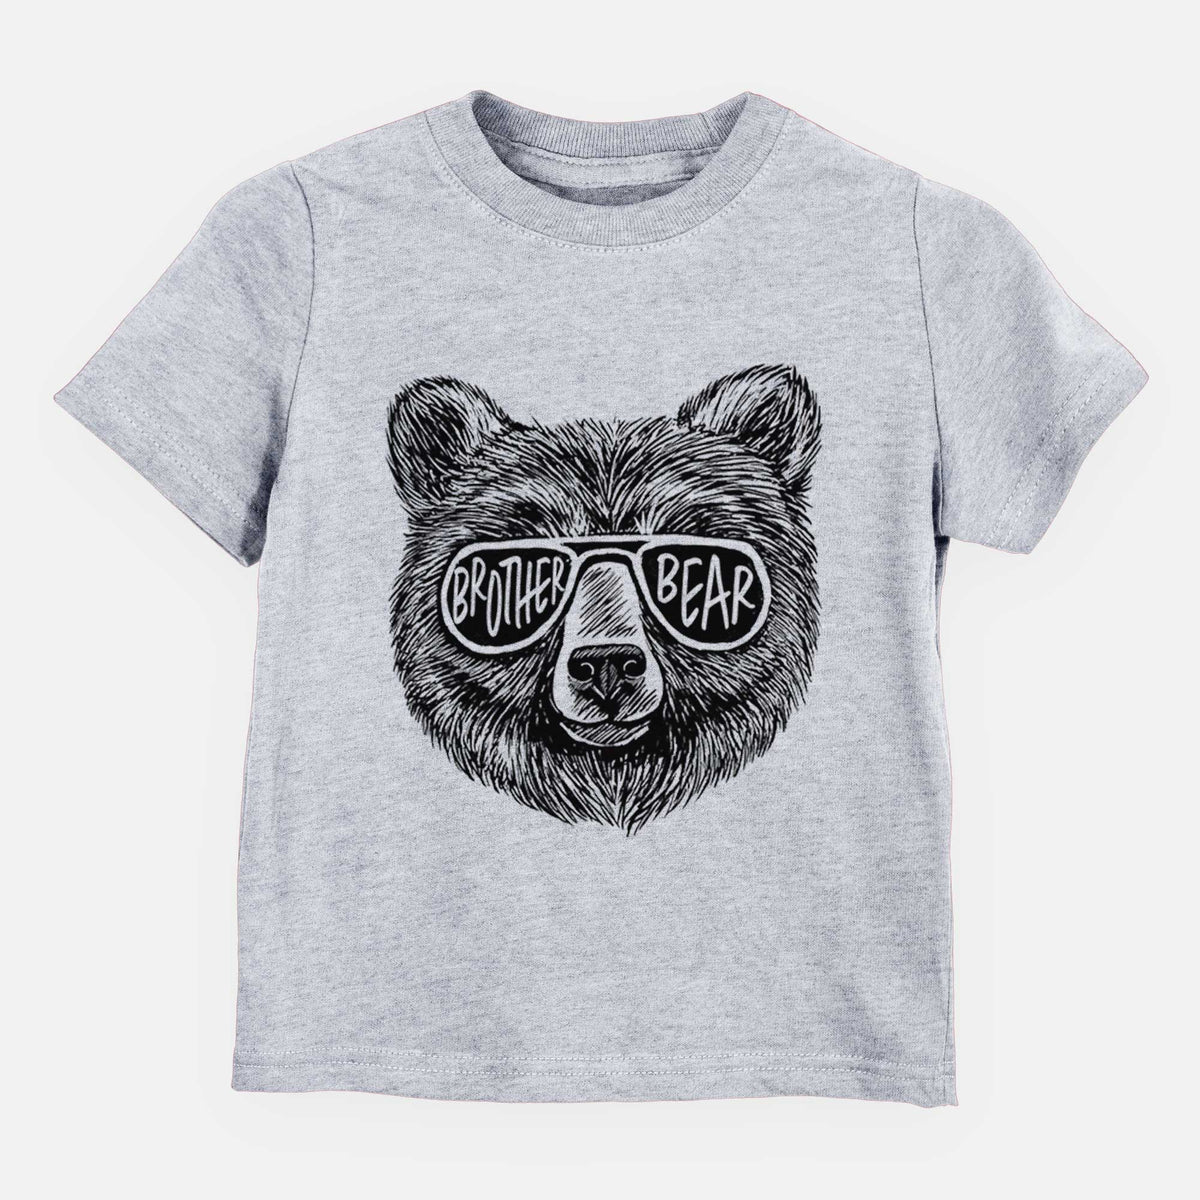 Brother Bear - Kids Shirt